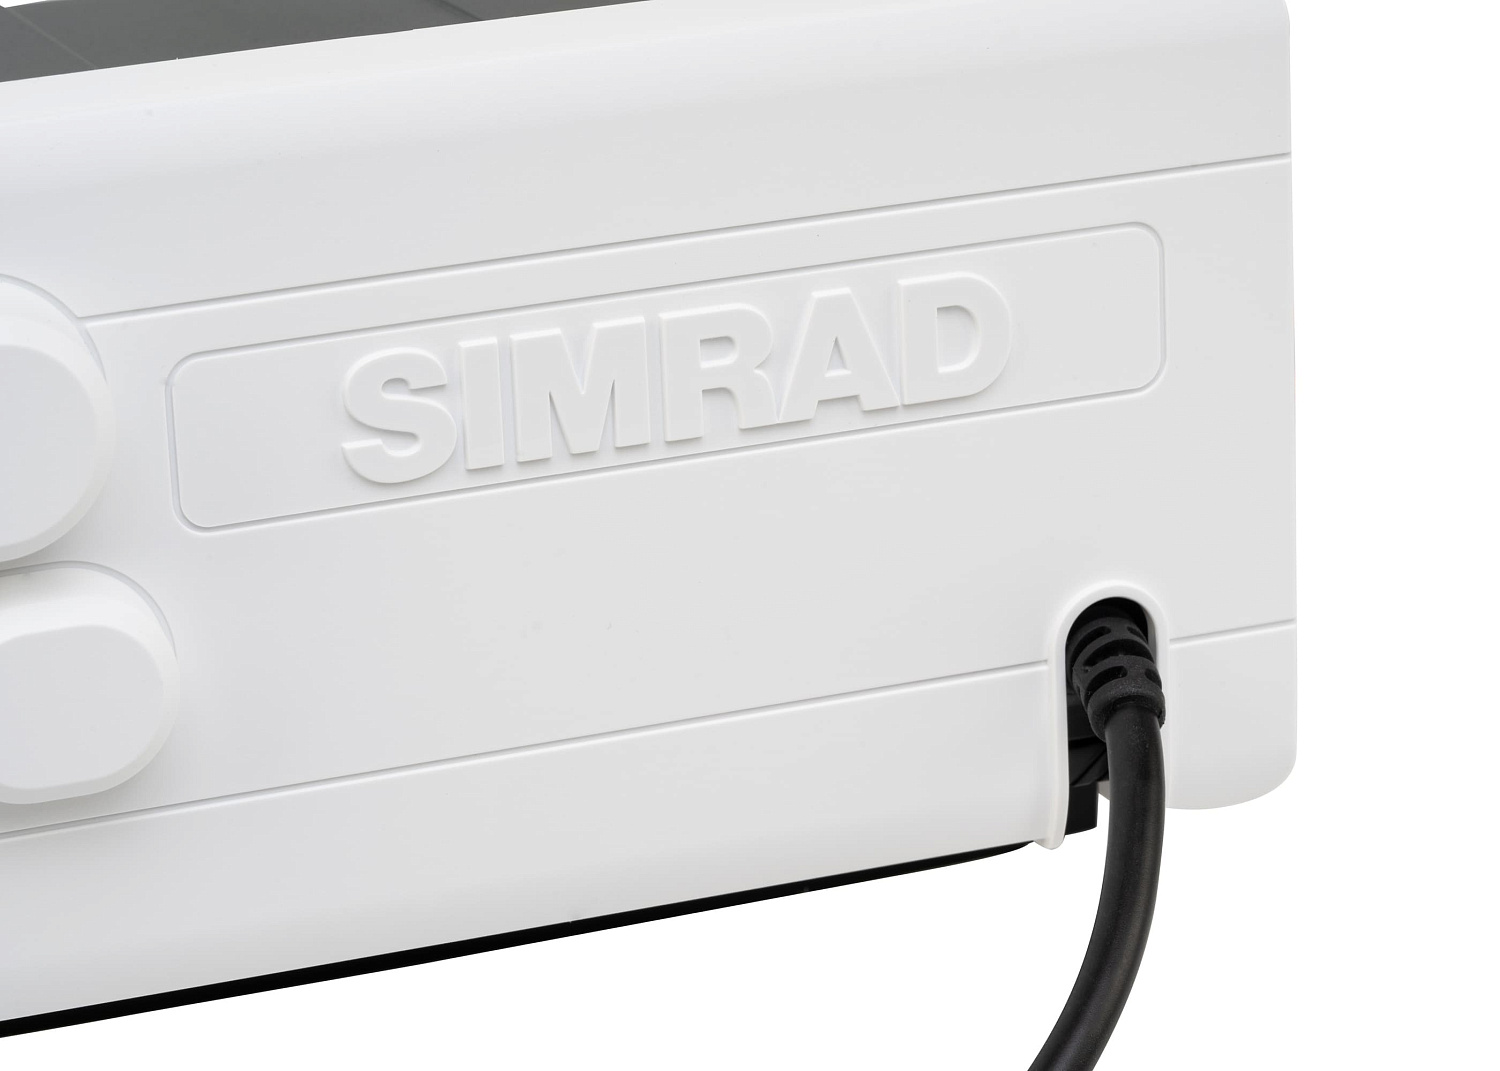 SIMRAD VHF Radio RS20S / with Integrated GPS Antenna